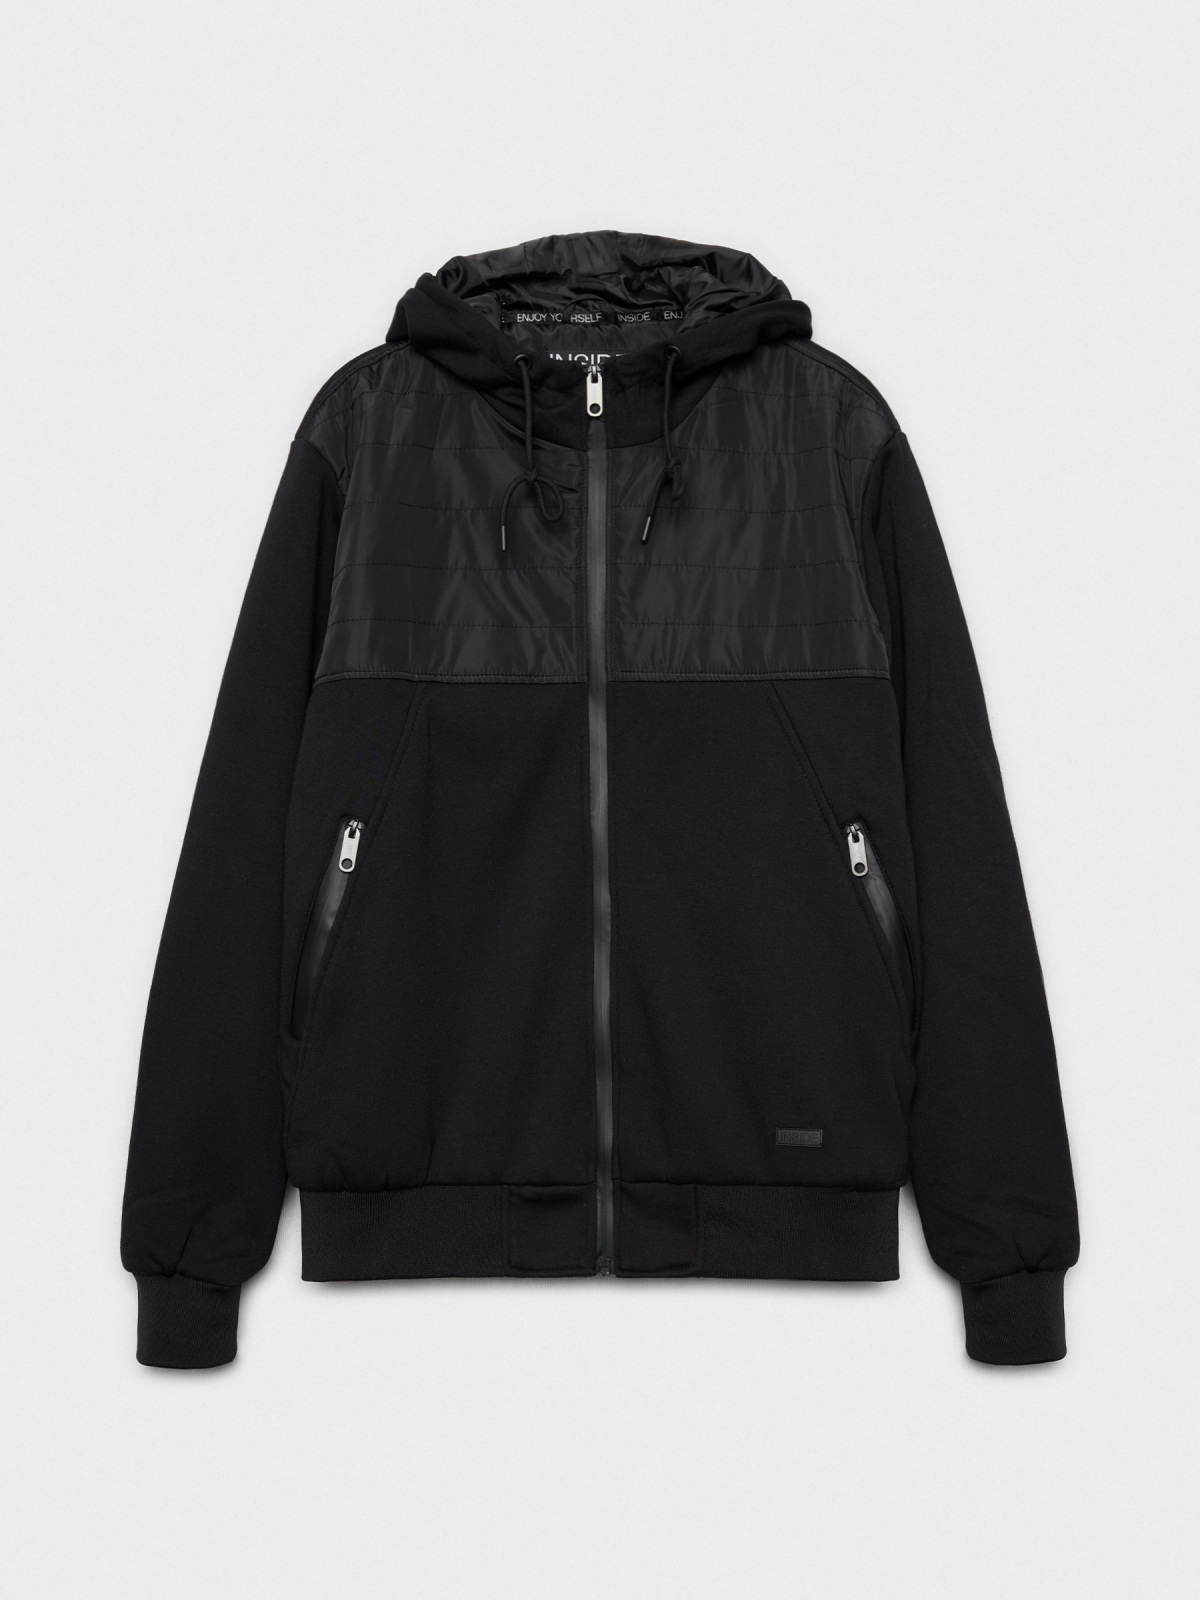  Combined hooded jacket black